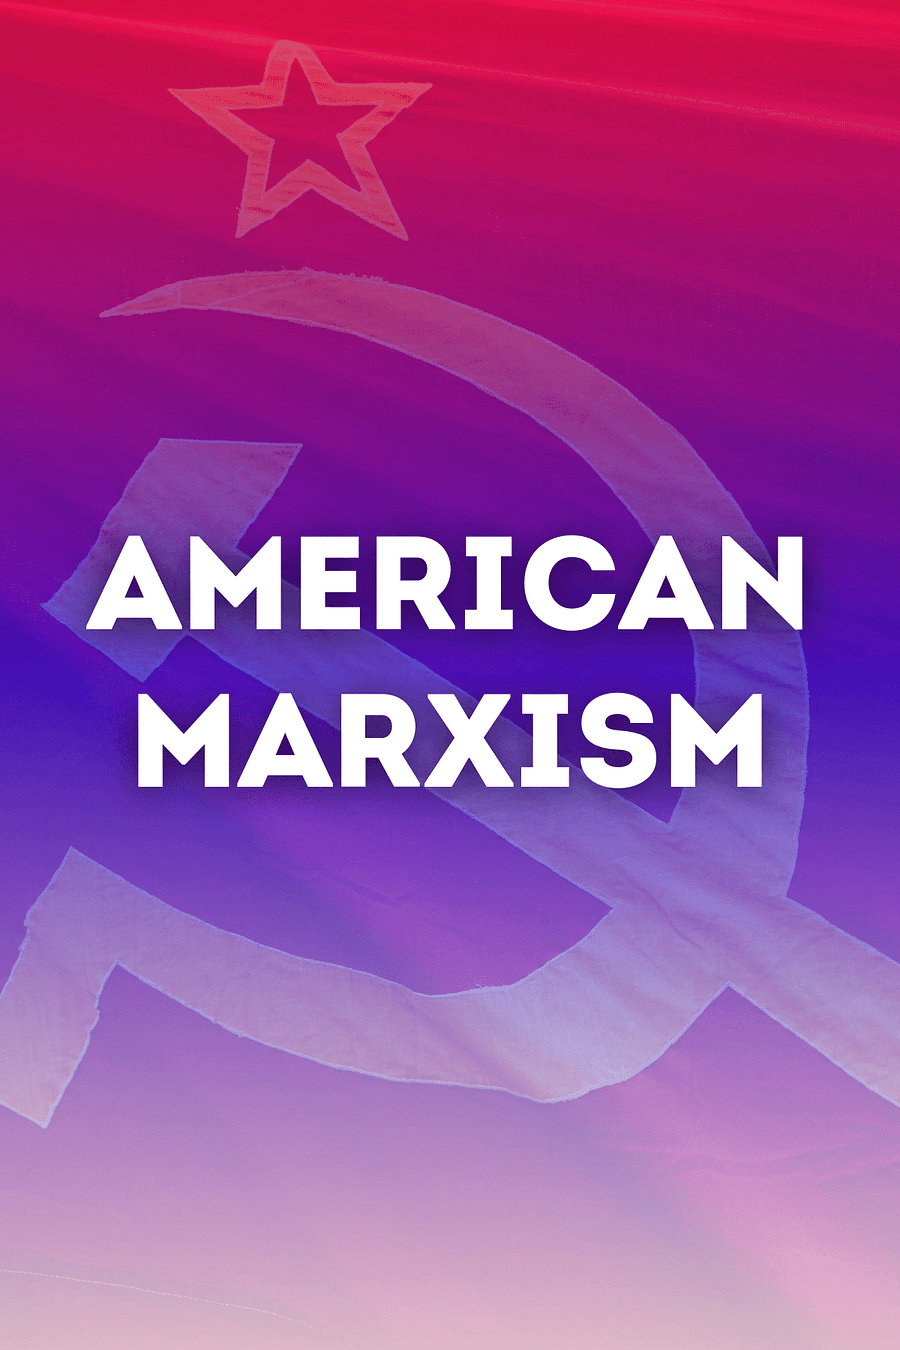 American Marxism by Mark R. Levin - Book Summary